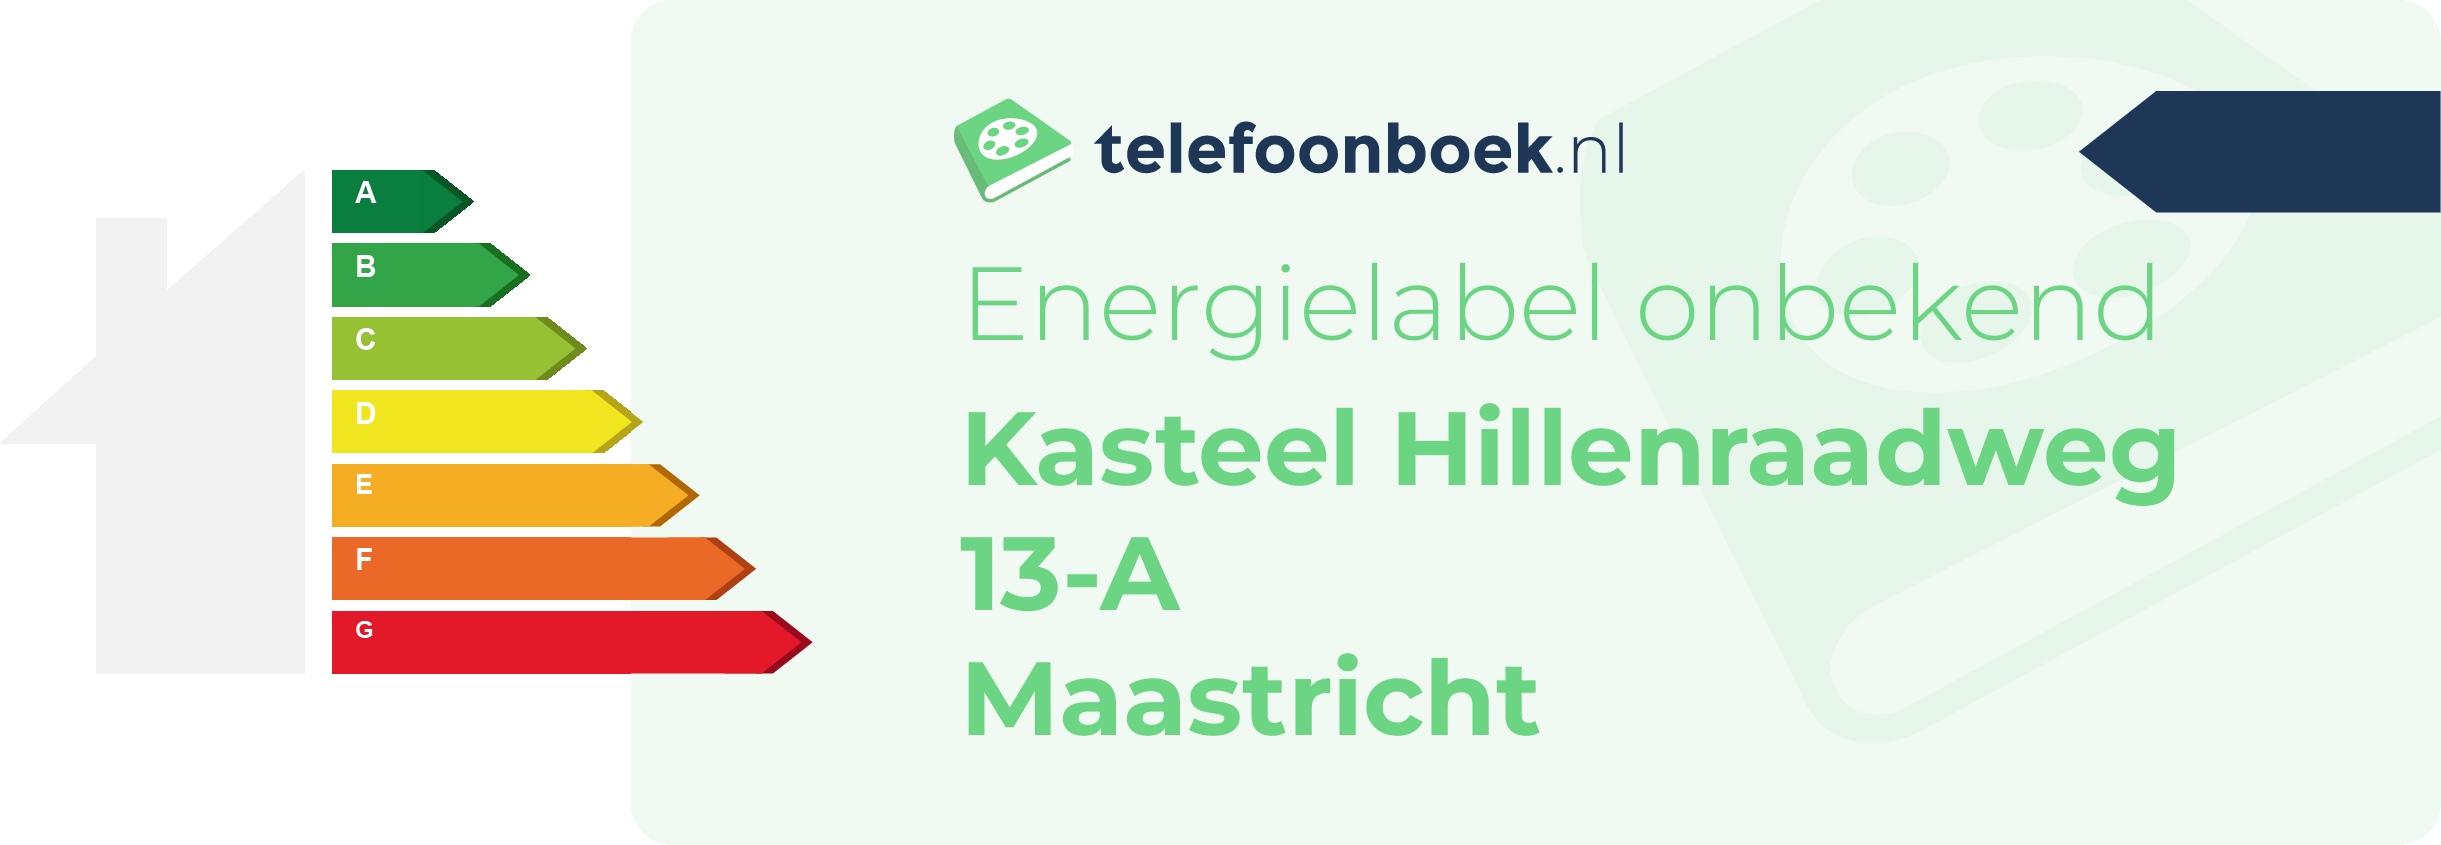 Energielabel Kasteel Hillenraadweg 13-A Maastricht